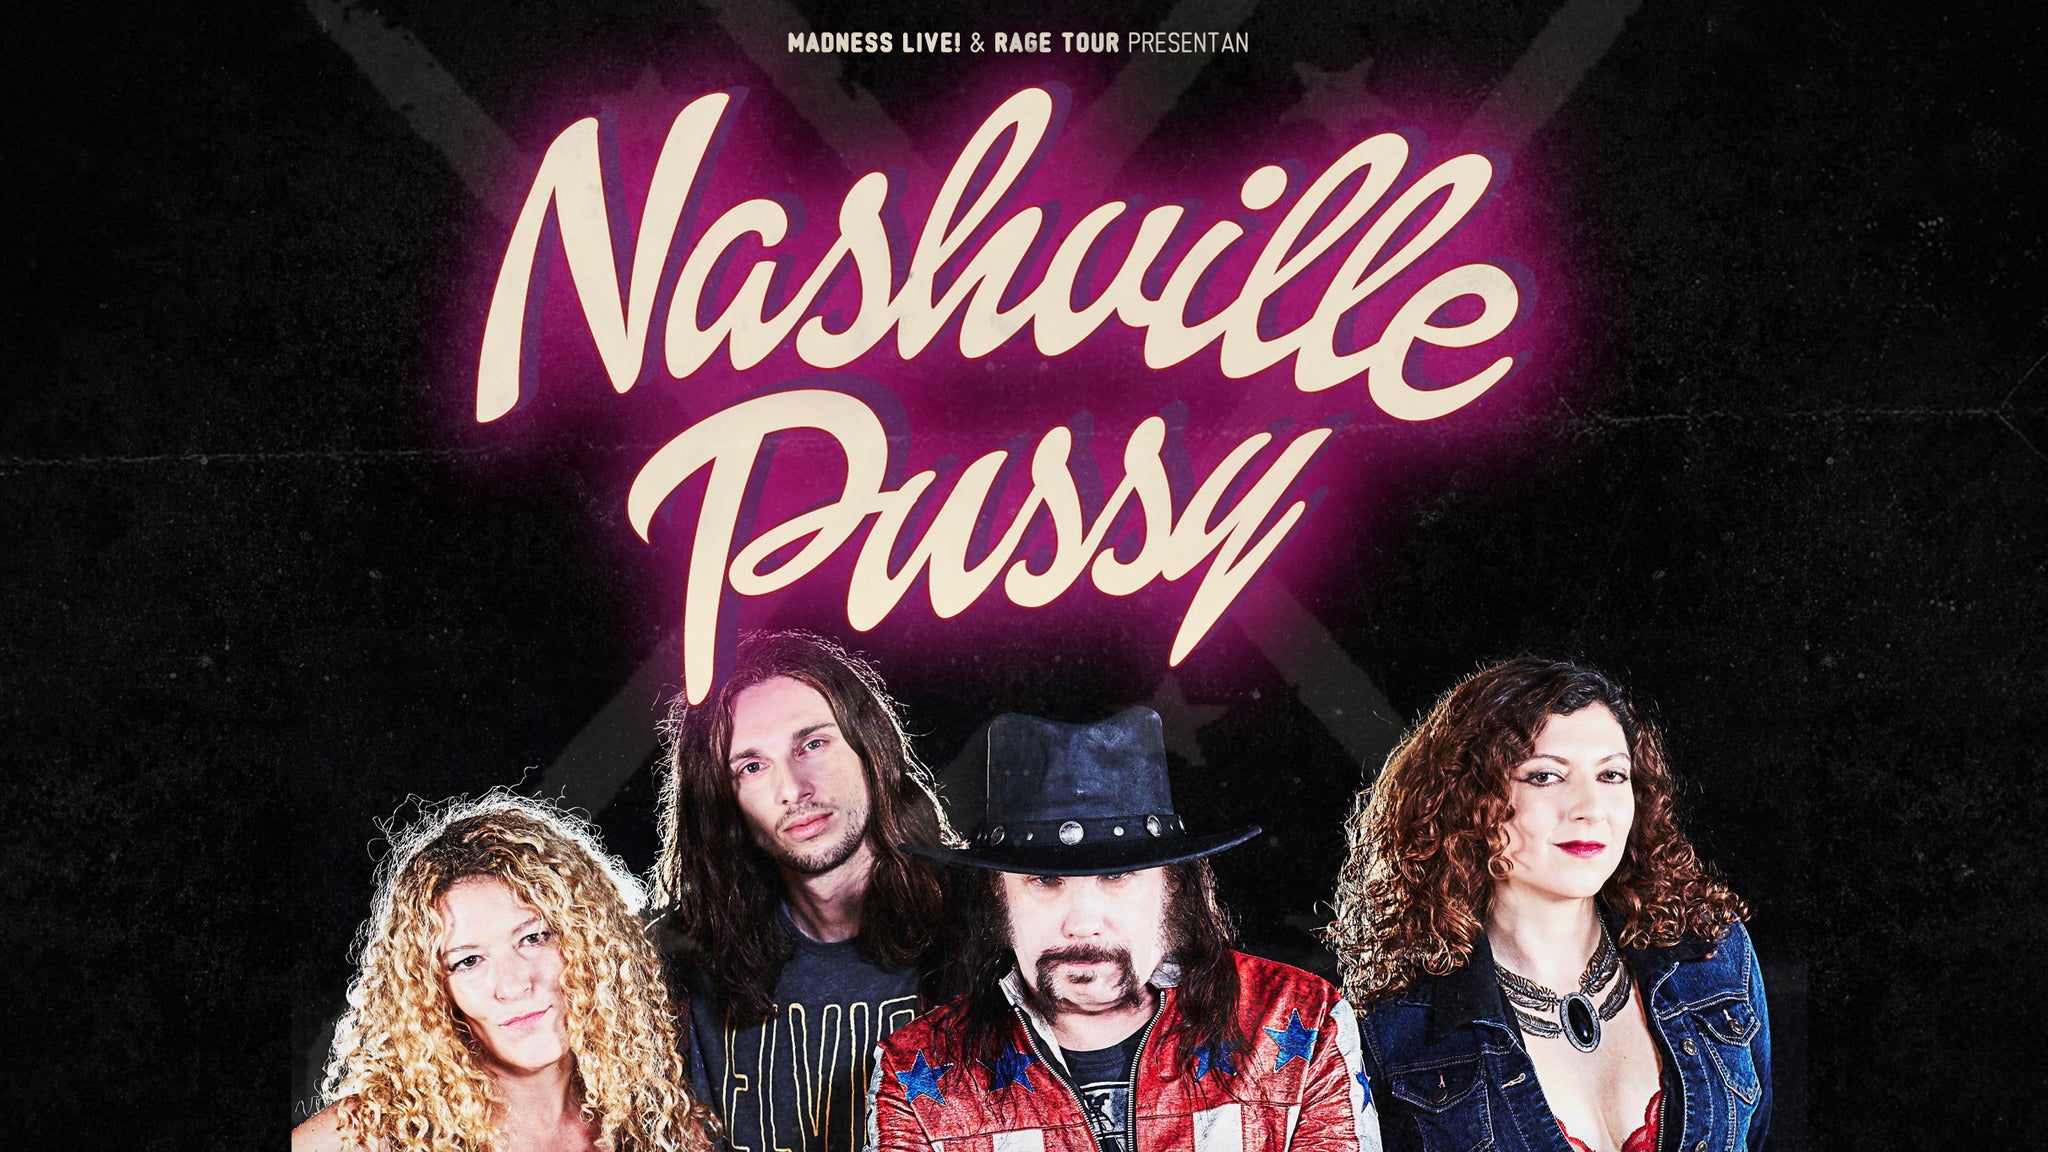 Nashville Pussy Event Title Pic